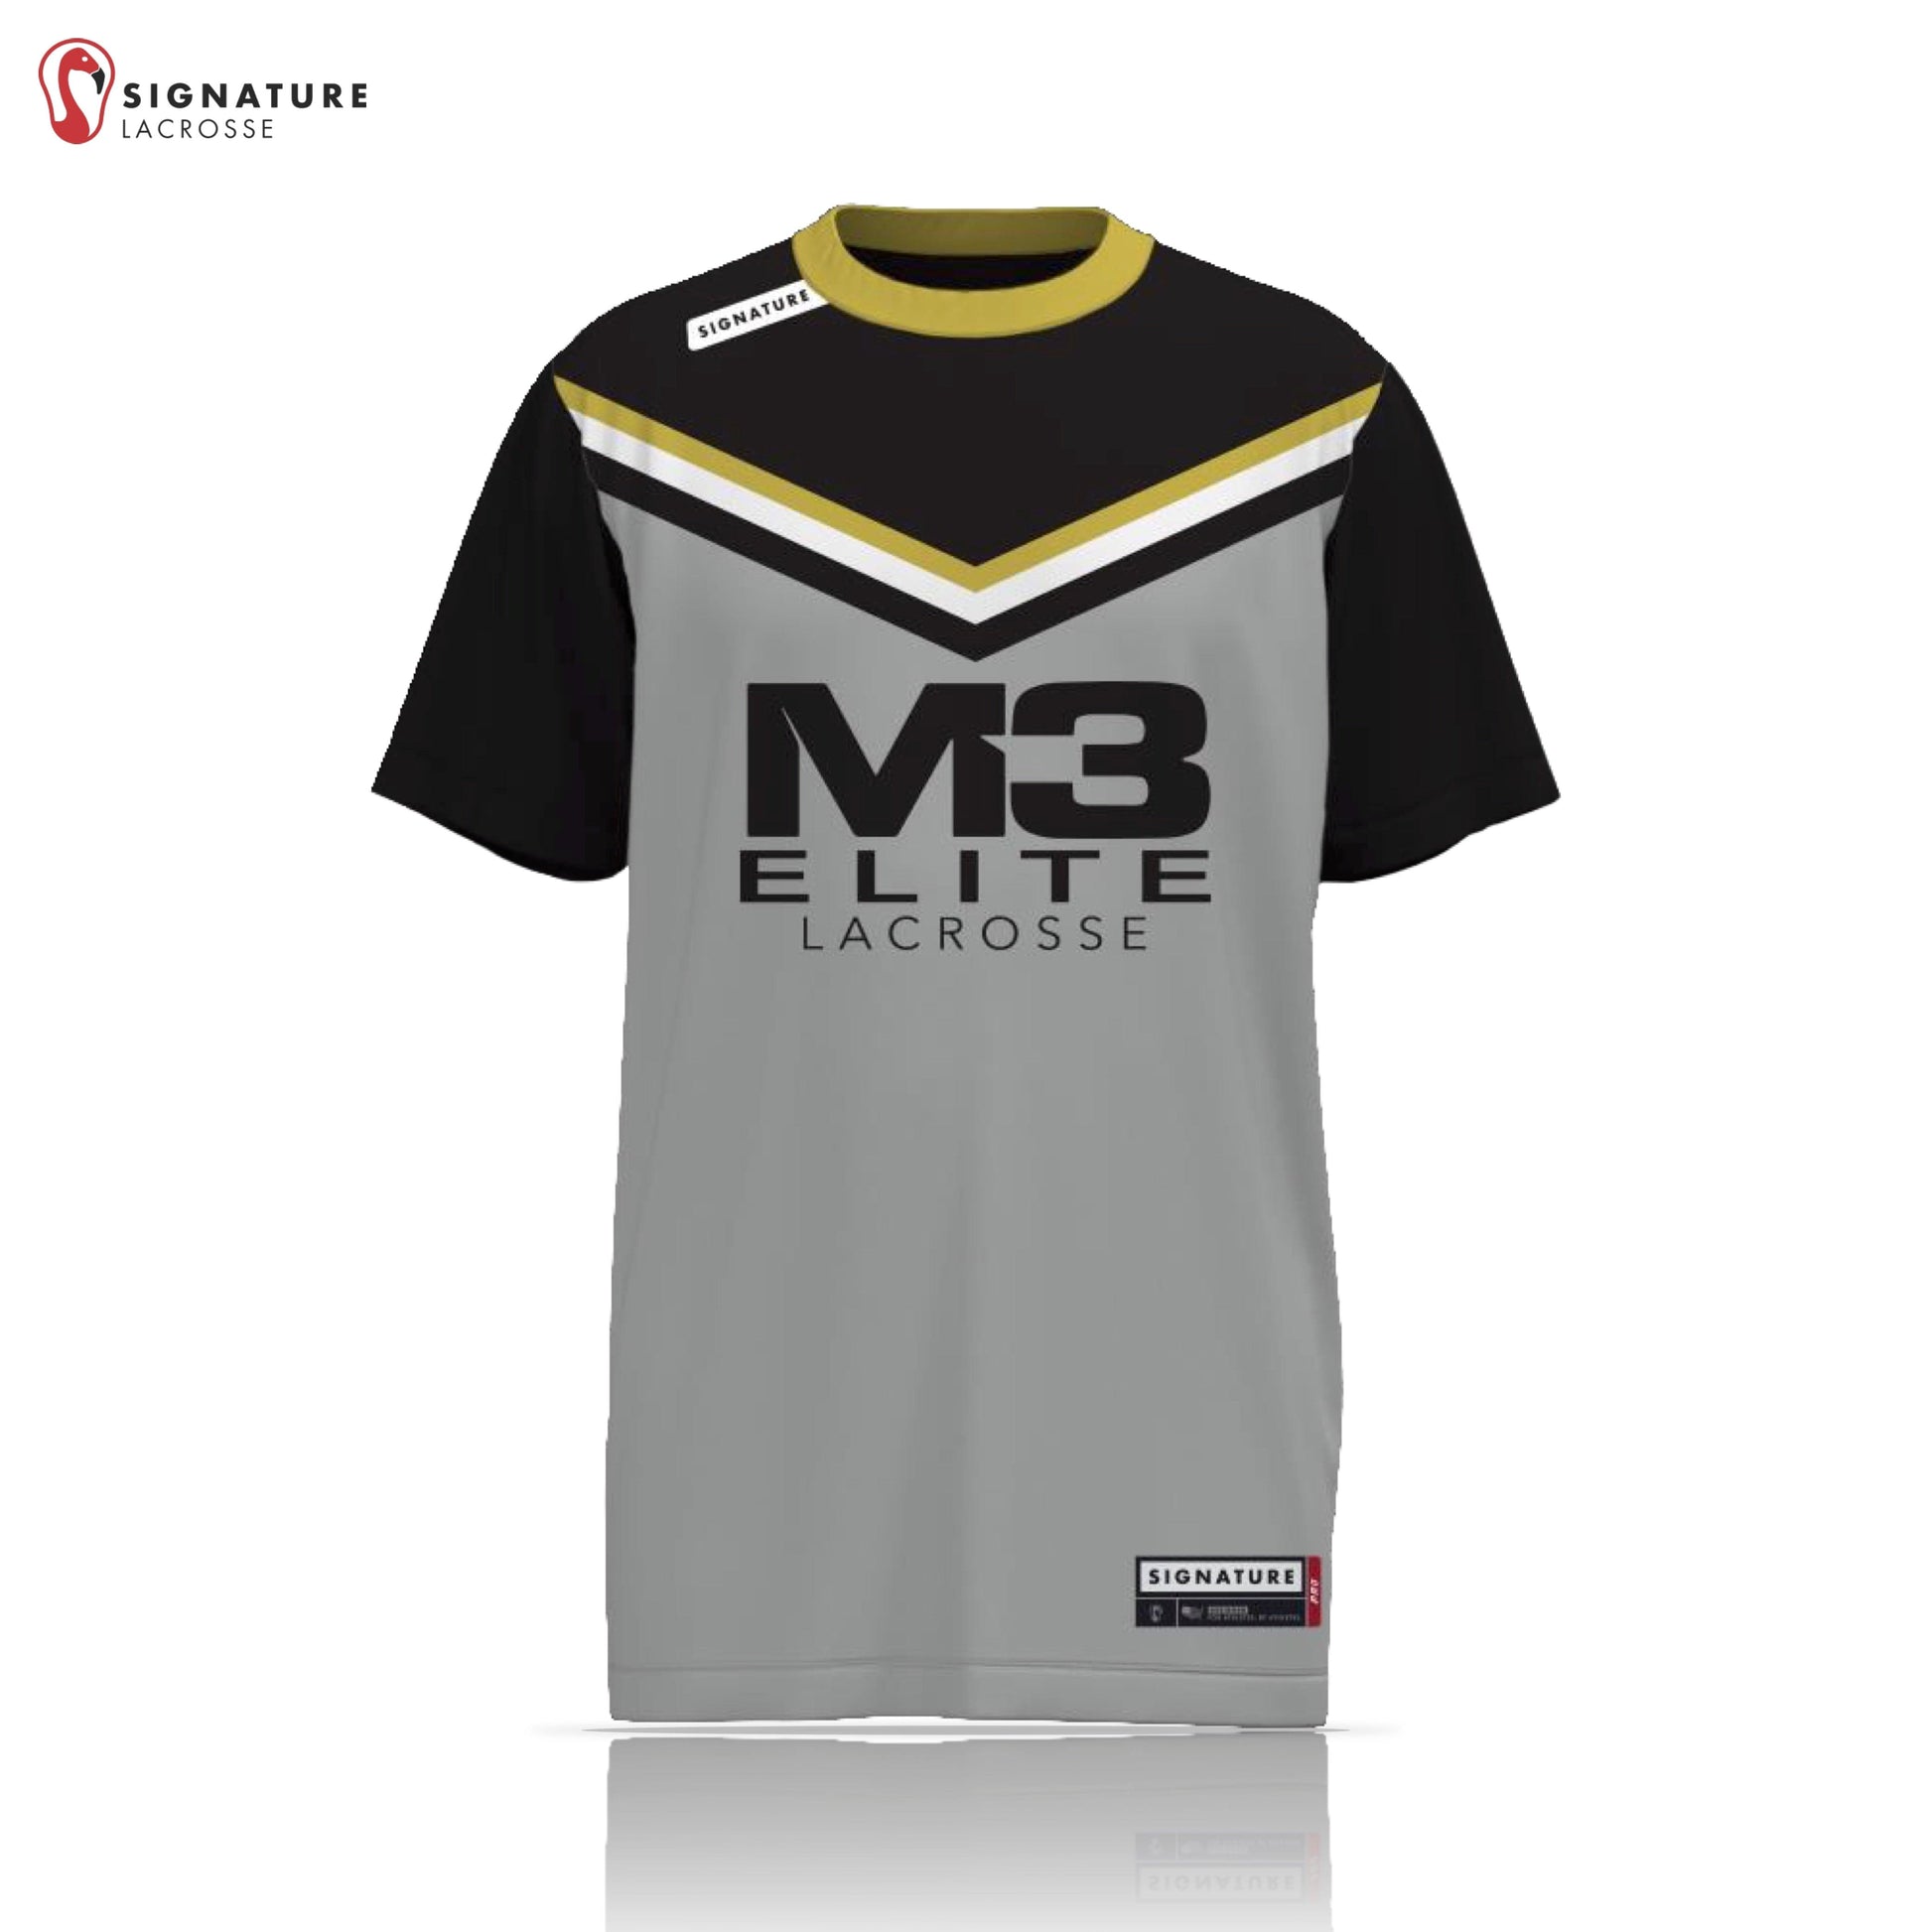 M3 Elite Men's 3 Piece Pro Game Package Signature Lacrosse